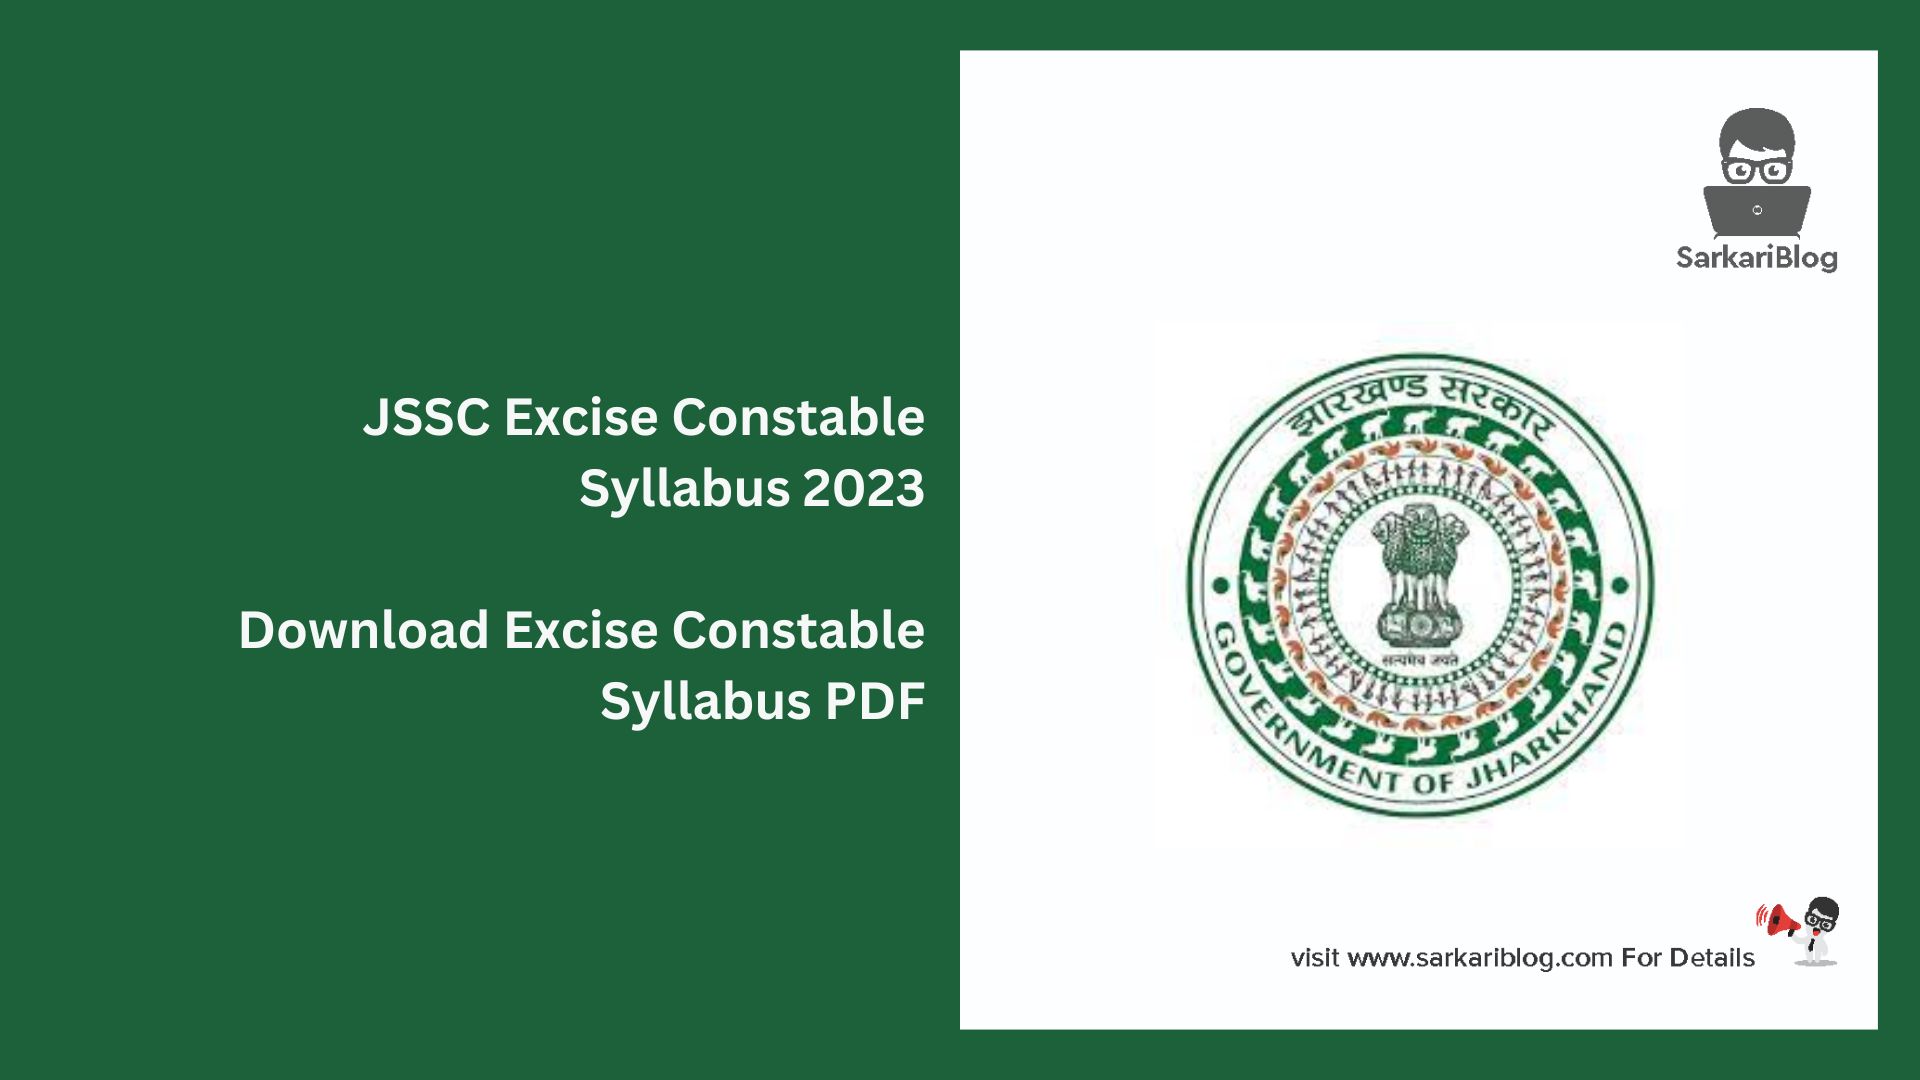 JSSC Excise Constable Syllabus 2023